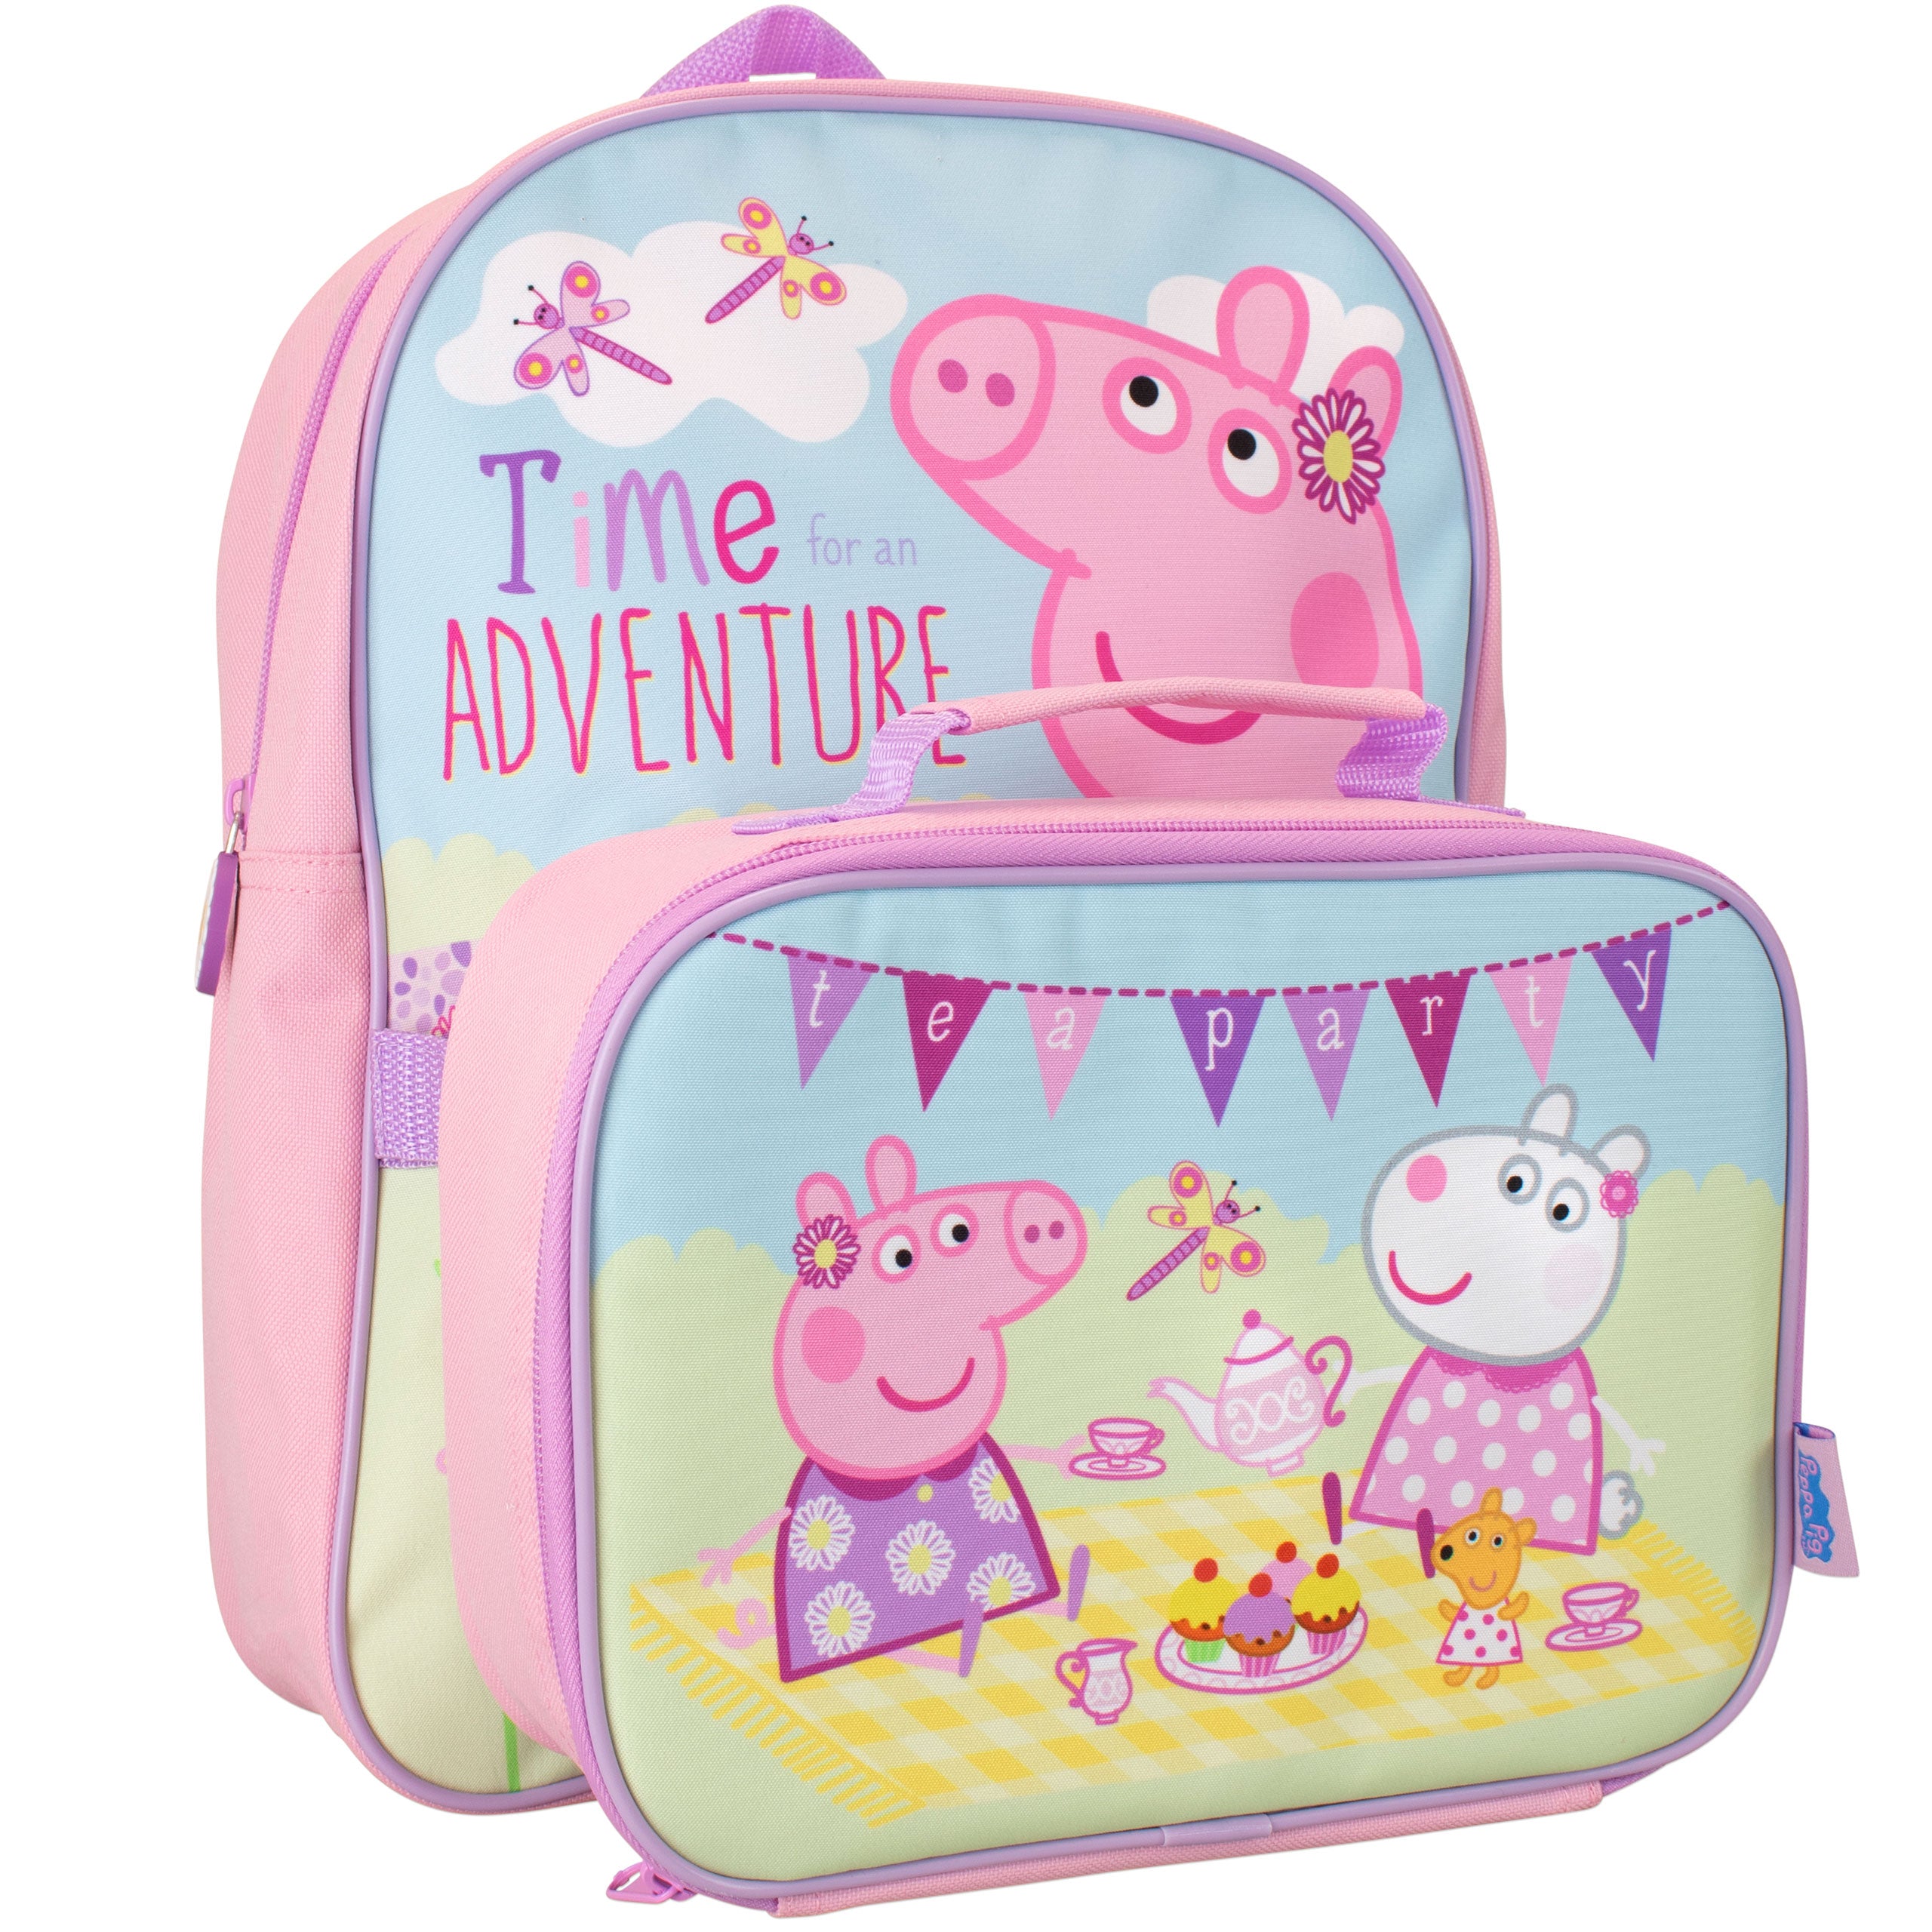 Peppa Pig Surprise Lunchbox Blind Bag Opening | Shopkins Gift Ems Disney  Fashems | PSToyReviews - YouTube